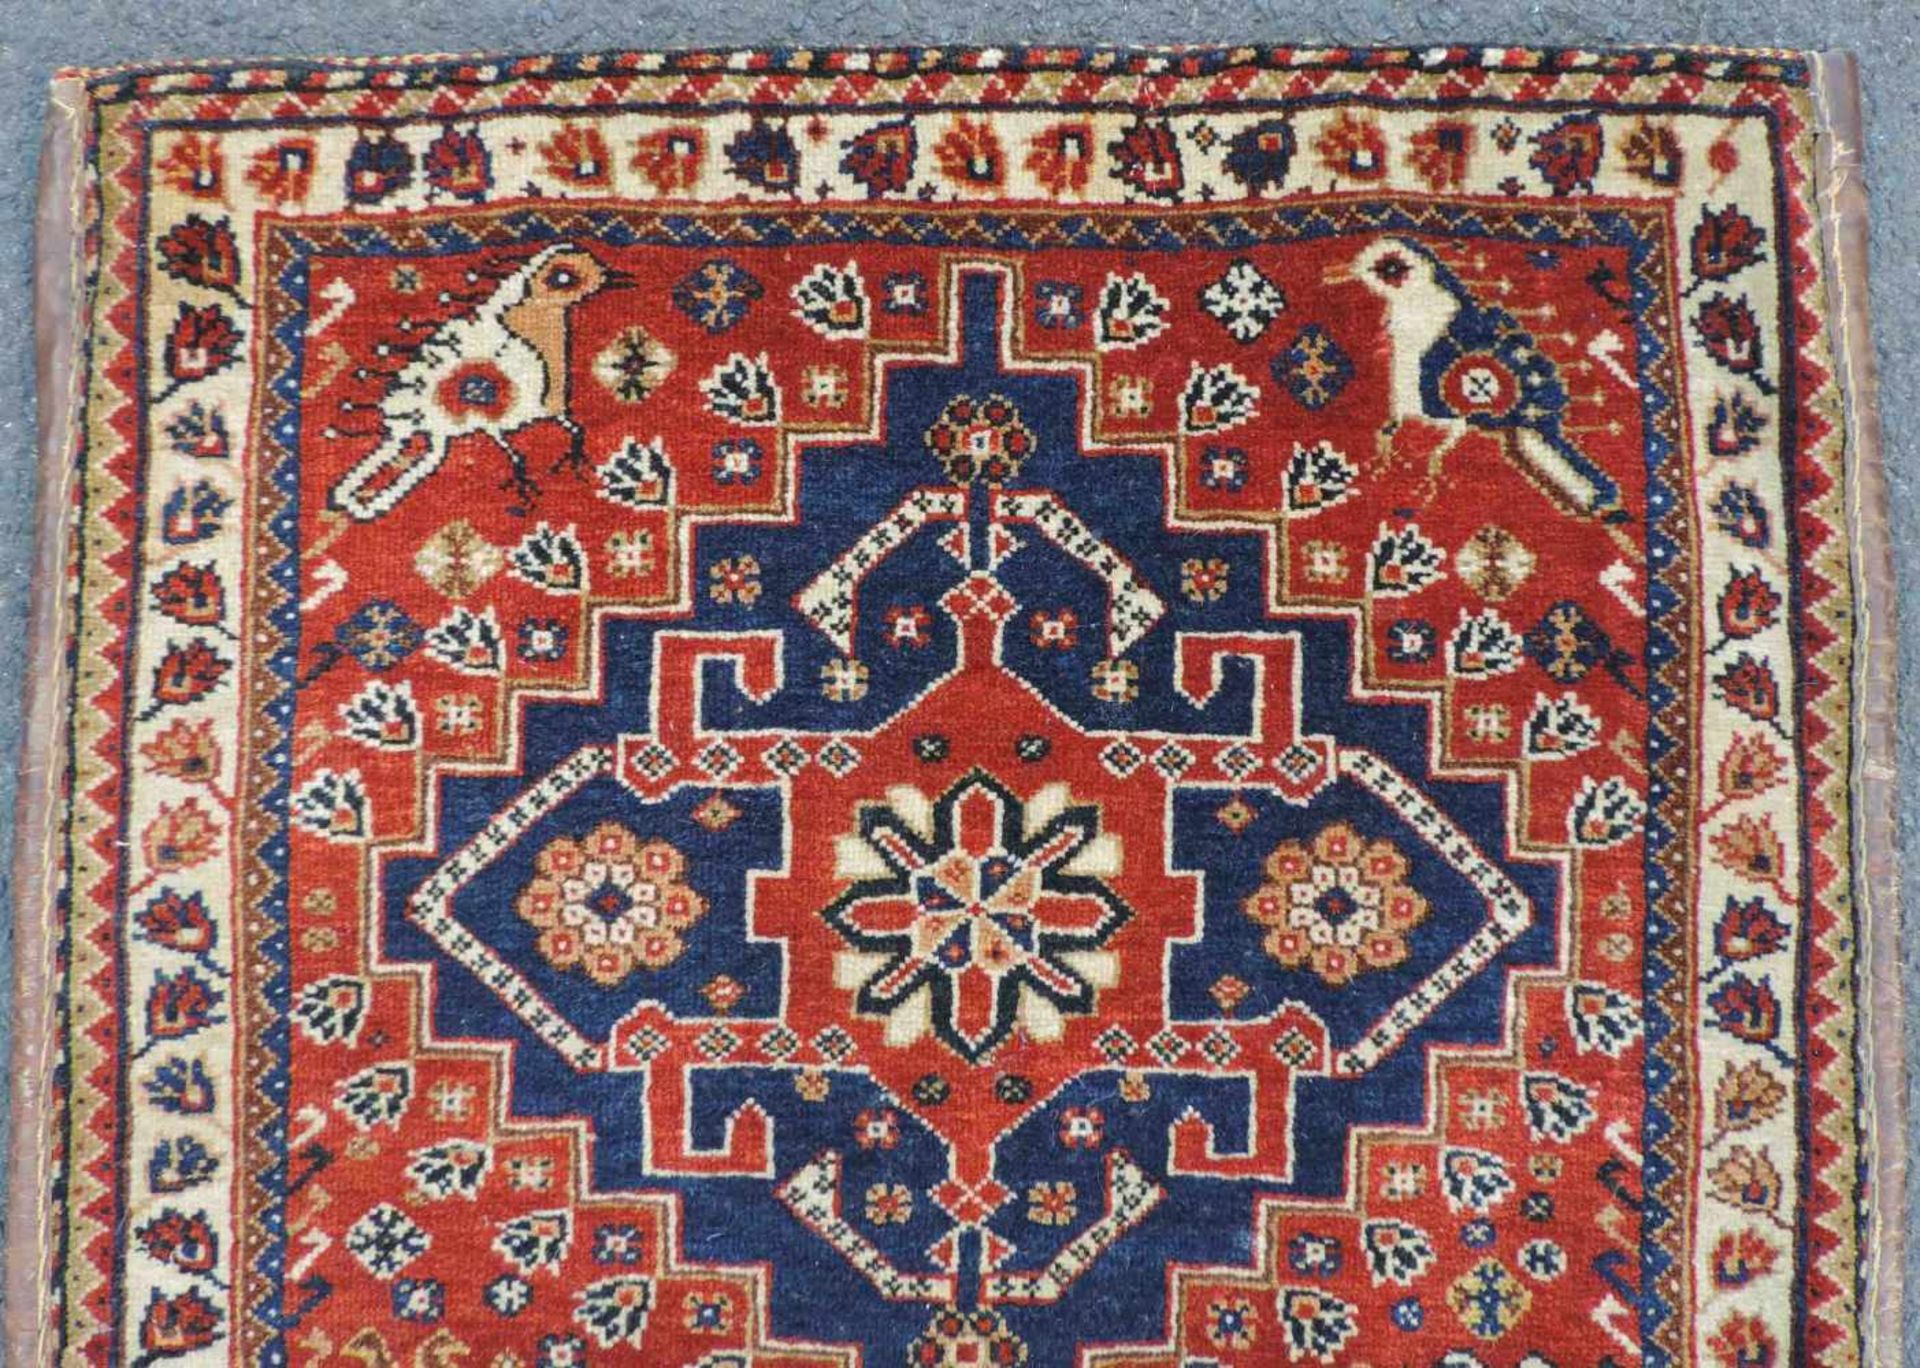 Qashqai / Kaschkai Perserteppich. Iran. Antik um 1910. Naturfarben.61 cm x 62 cm. Handgeknüpft. - Image 3 of 4